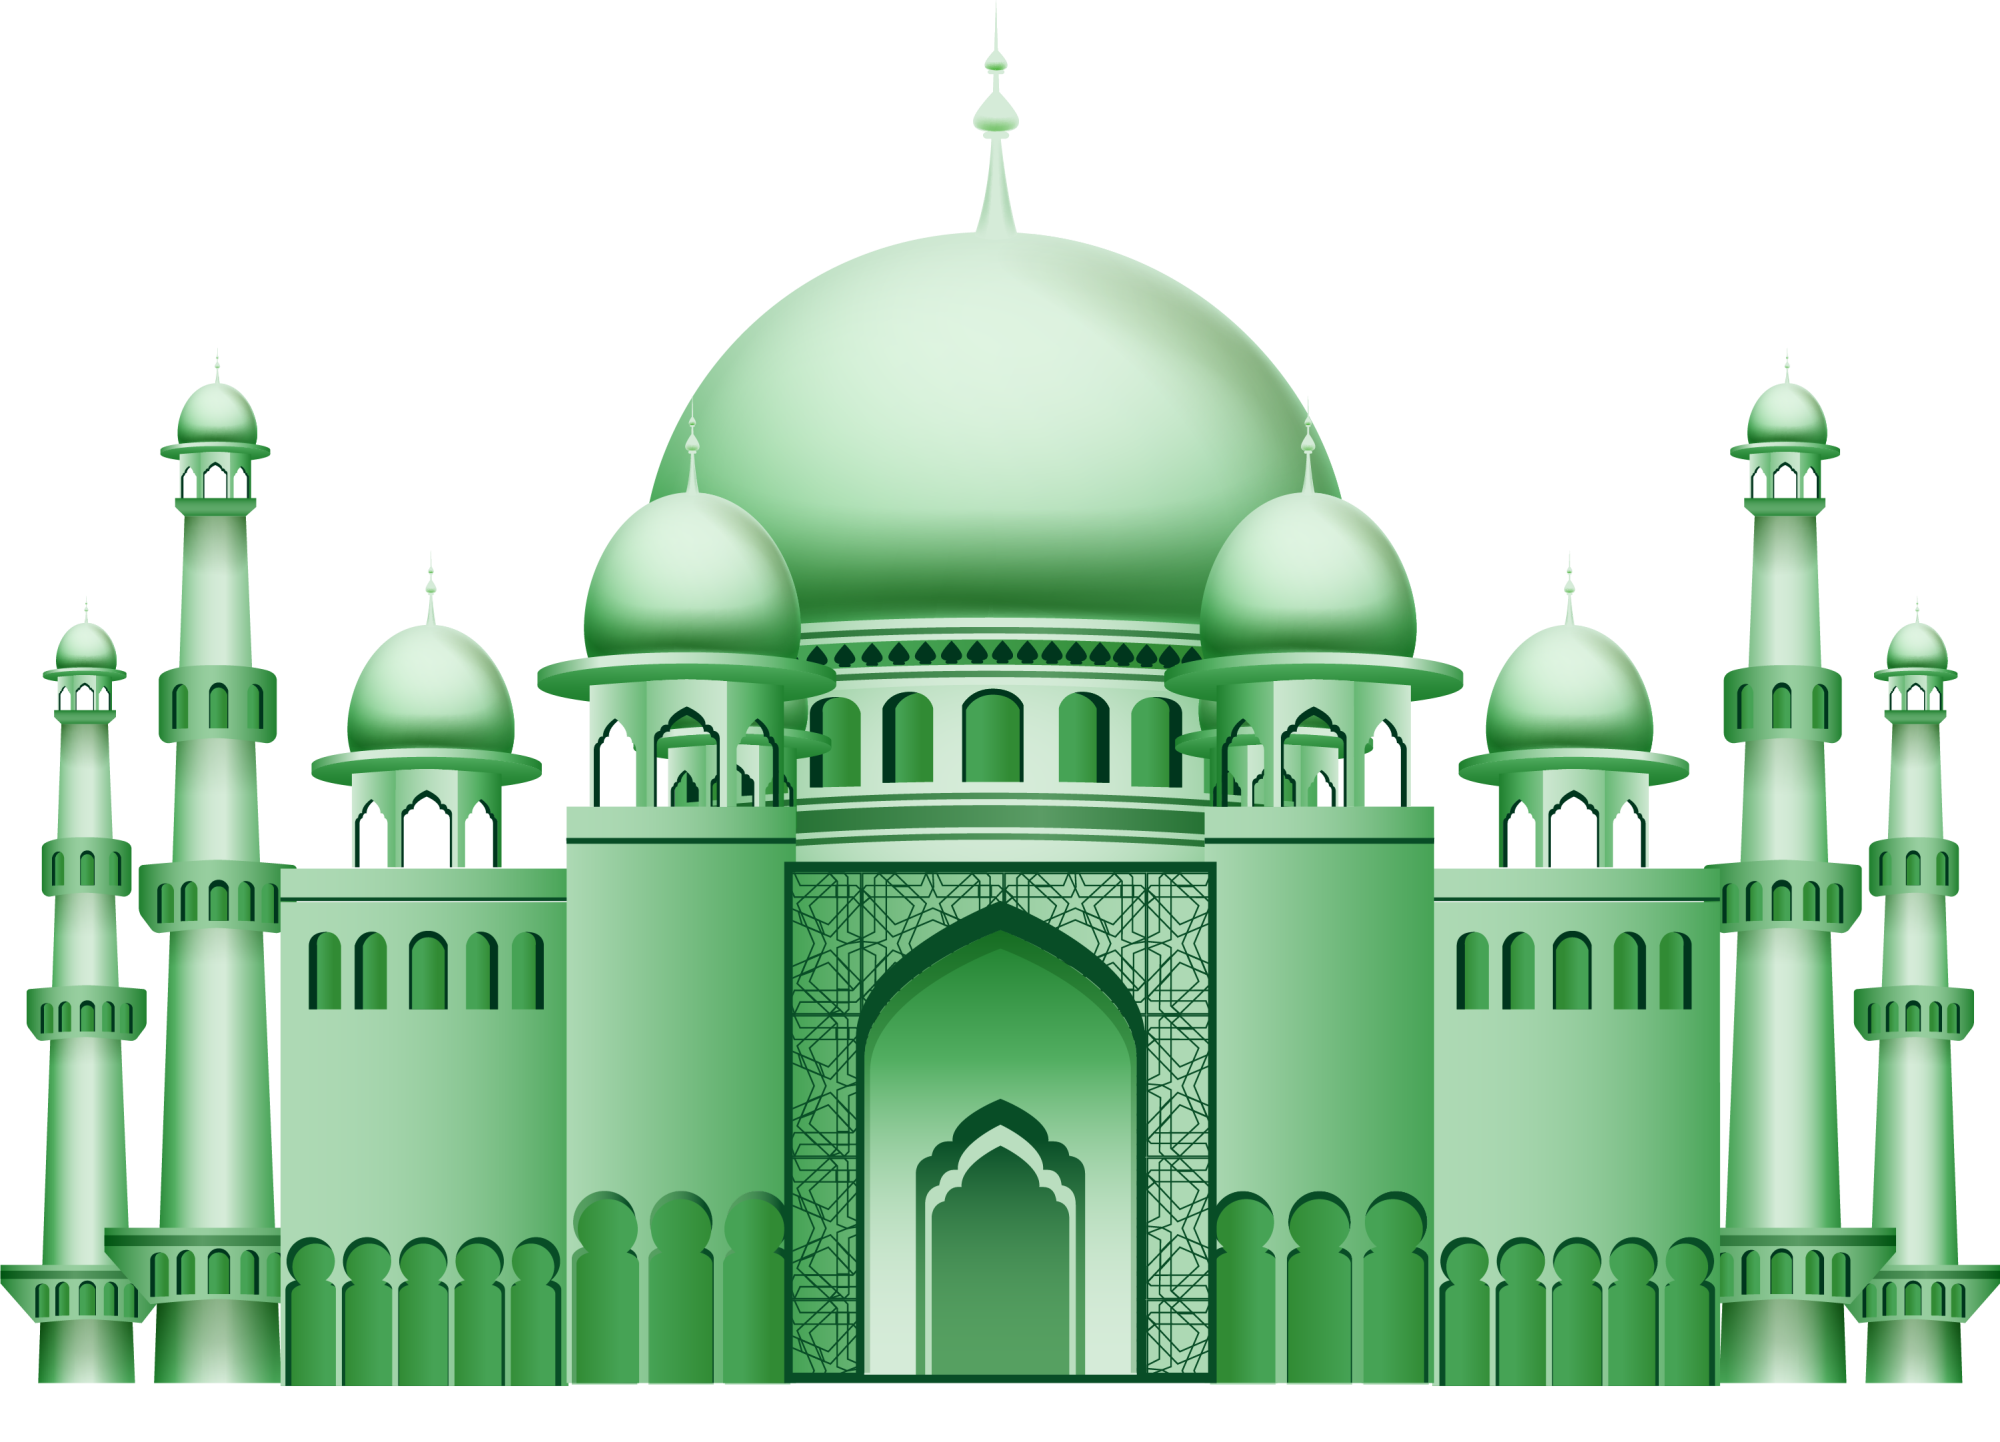 Of Mosque Worship Green Church Place Cartoon Clipart